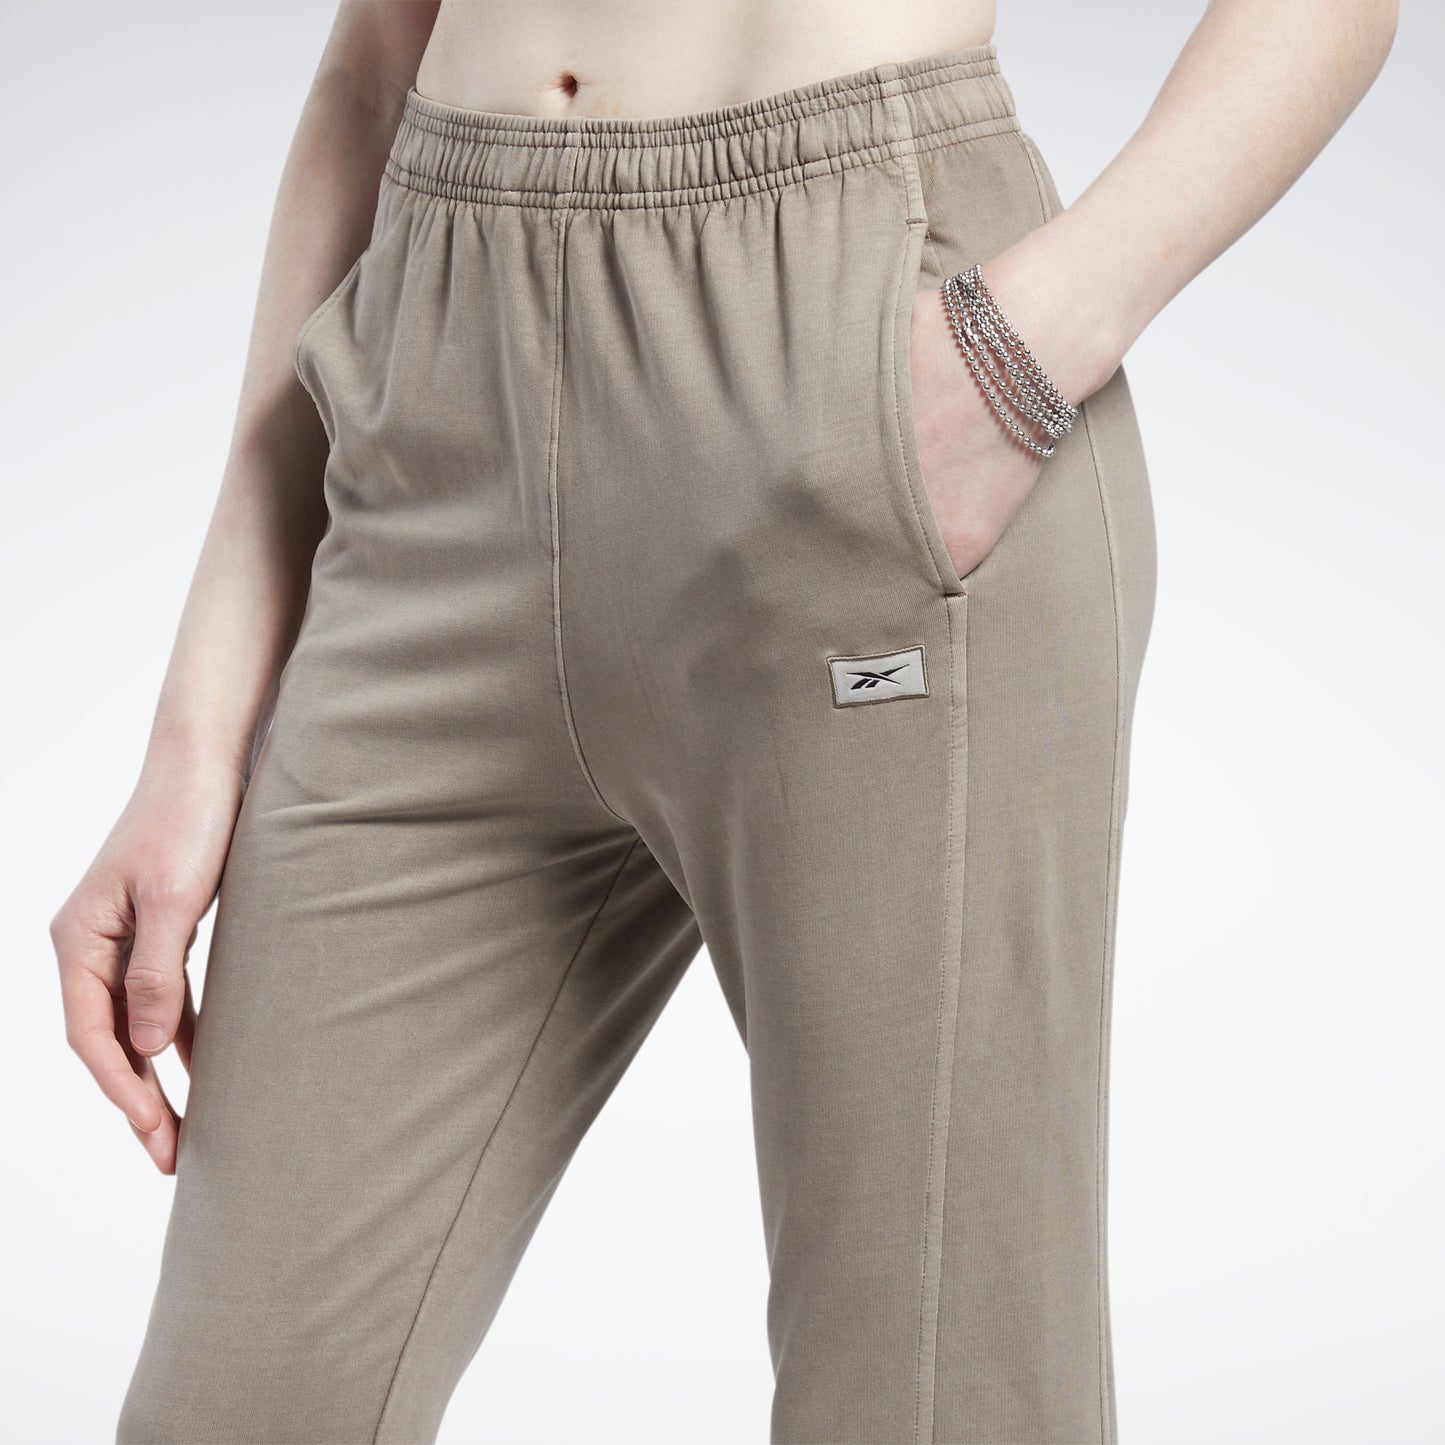 Reebok Ladies Grey Marl Jogging Sweat Pants Size 12